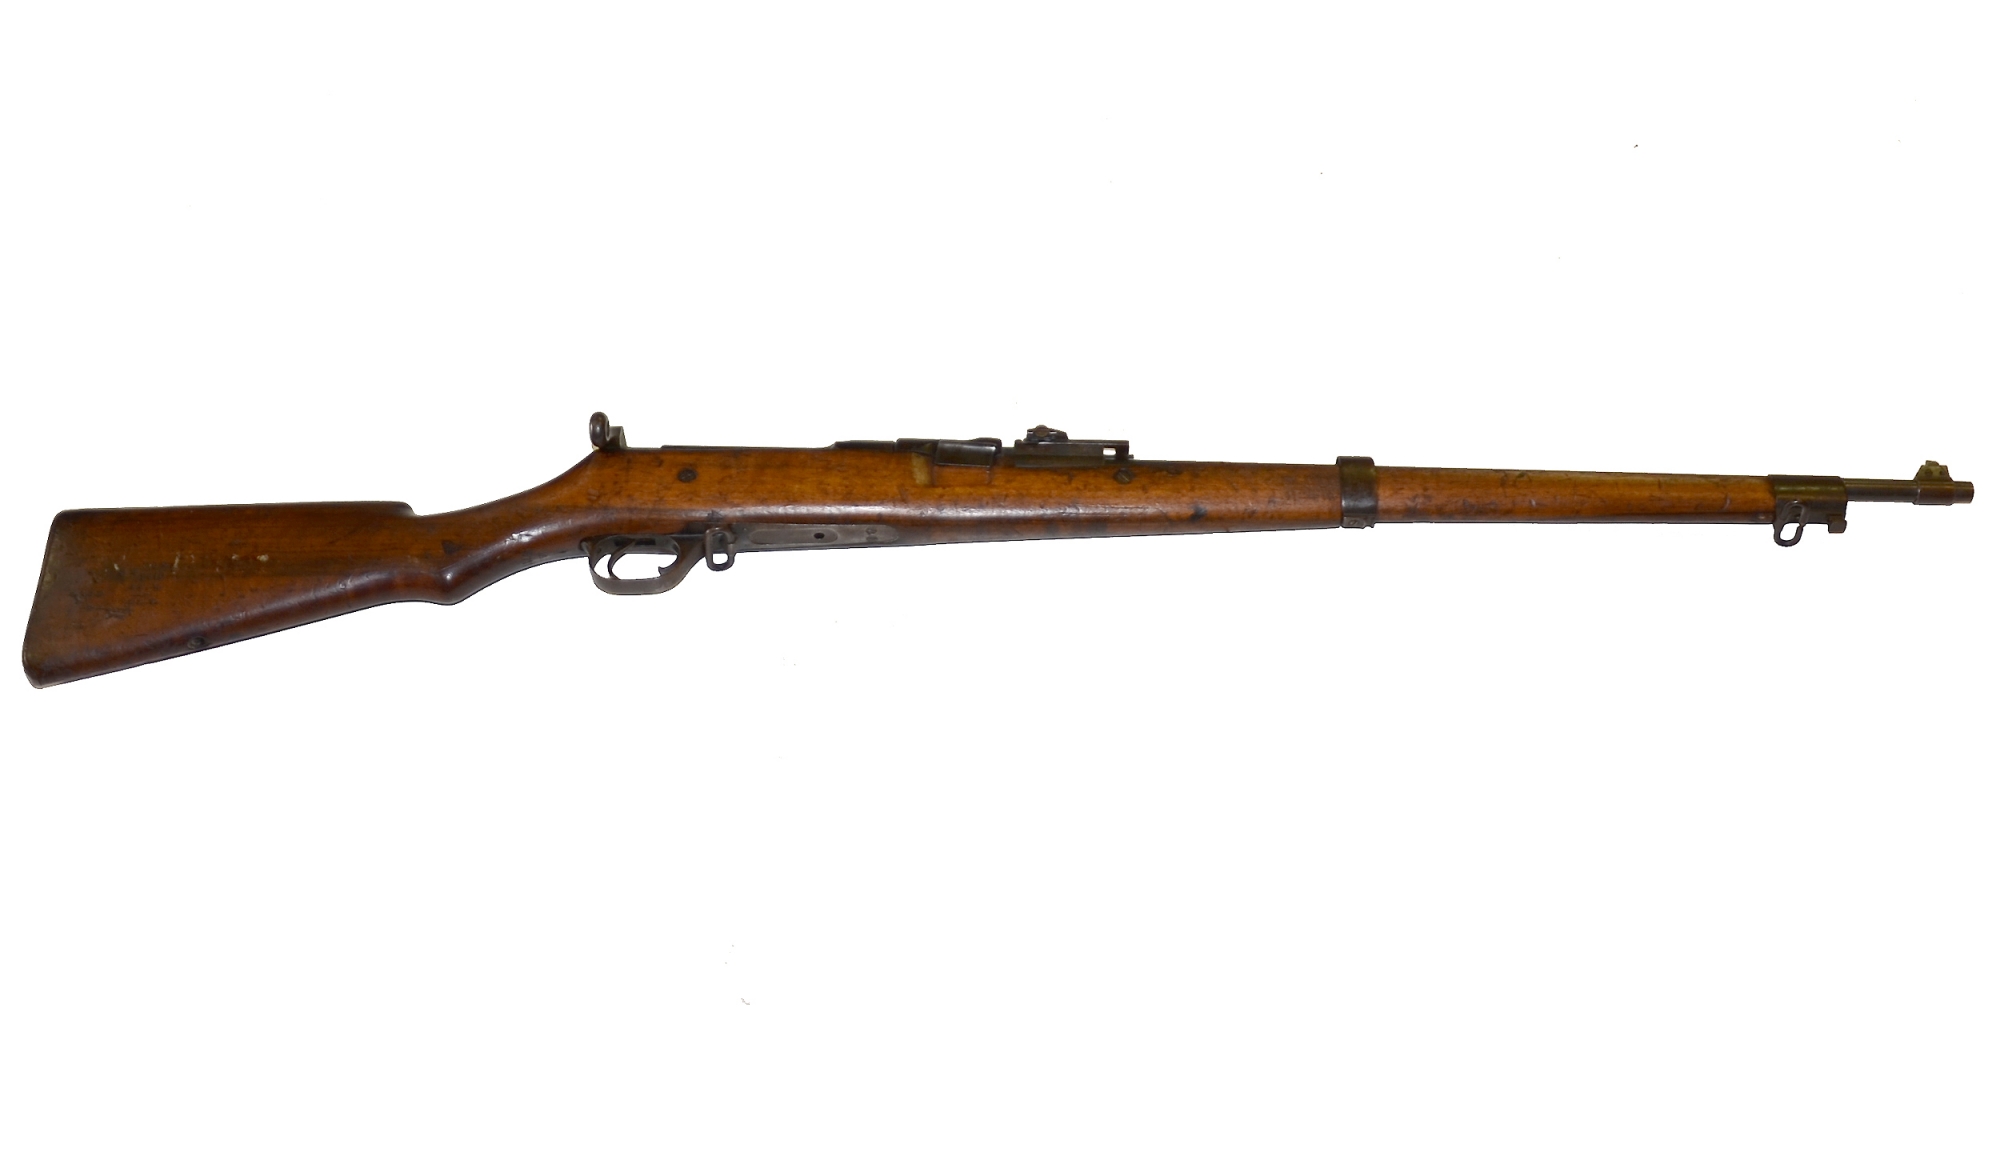 WW1 Canadian ross mark II rifle.